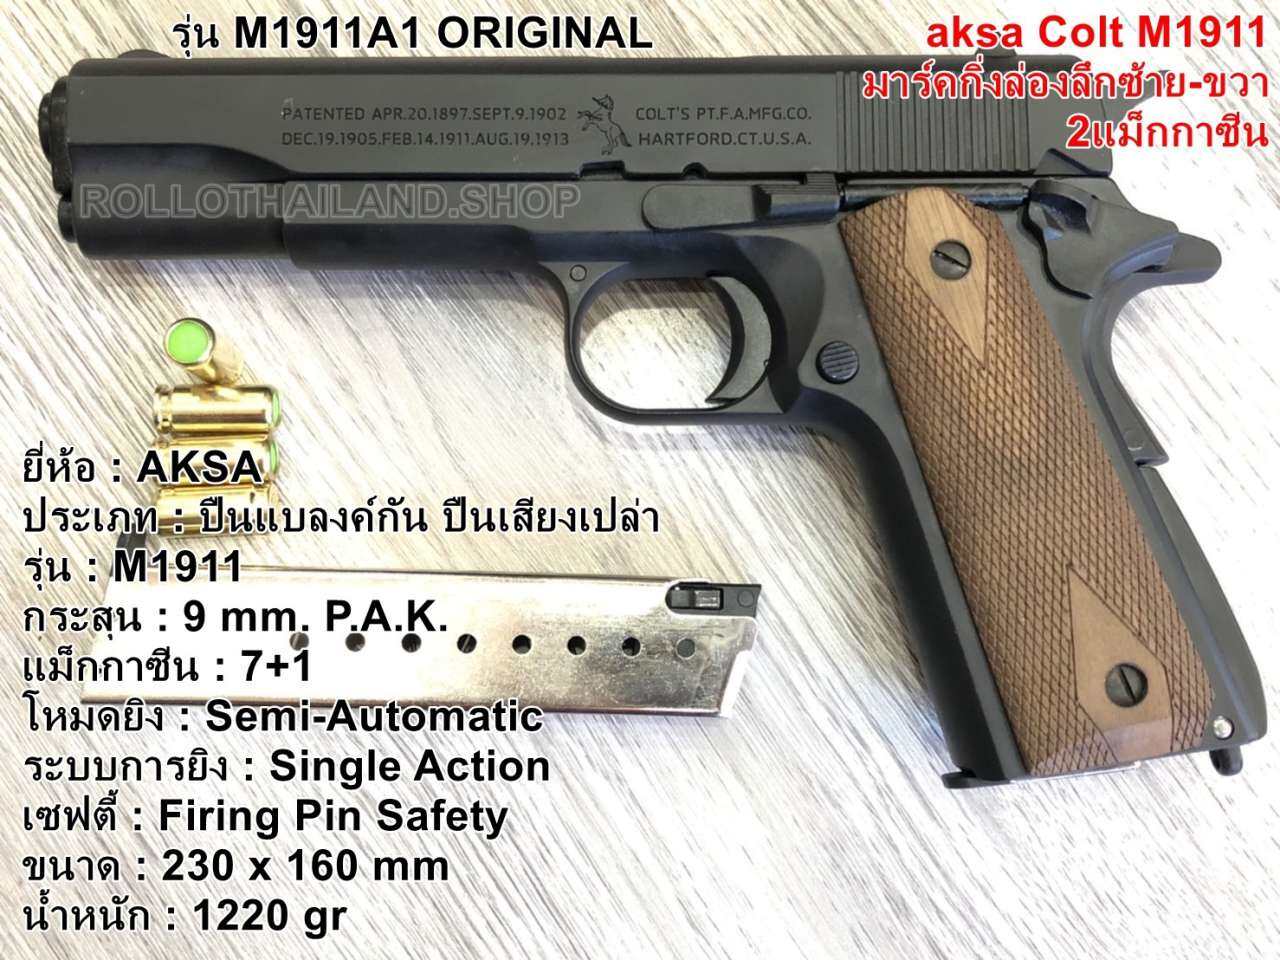 AKSA COLT M1911A1 ORIGINAL สีดำ กริปไม้ 2 แม็กกาซีน สำหรับถ่ายภาพยนต์ ปล่อยตัวนักกีฬา